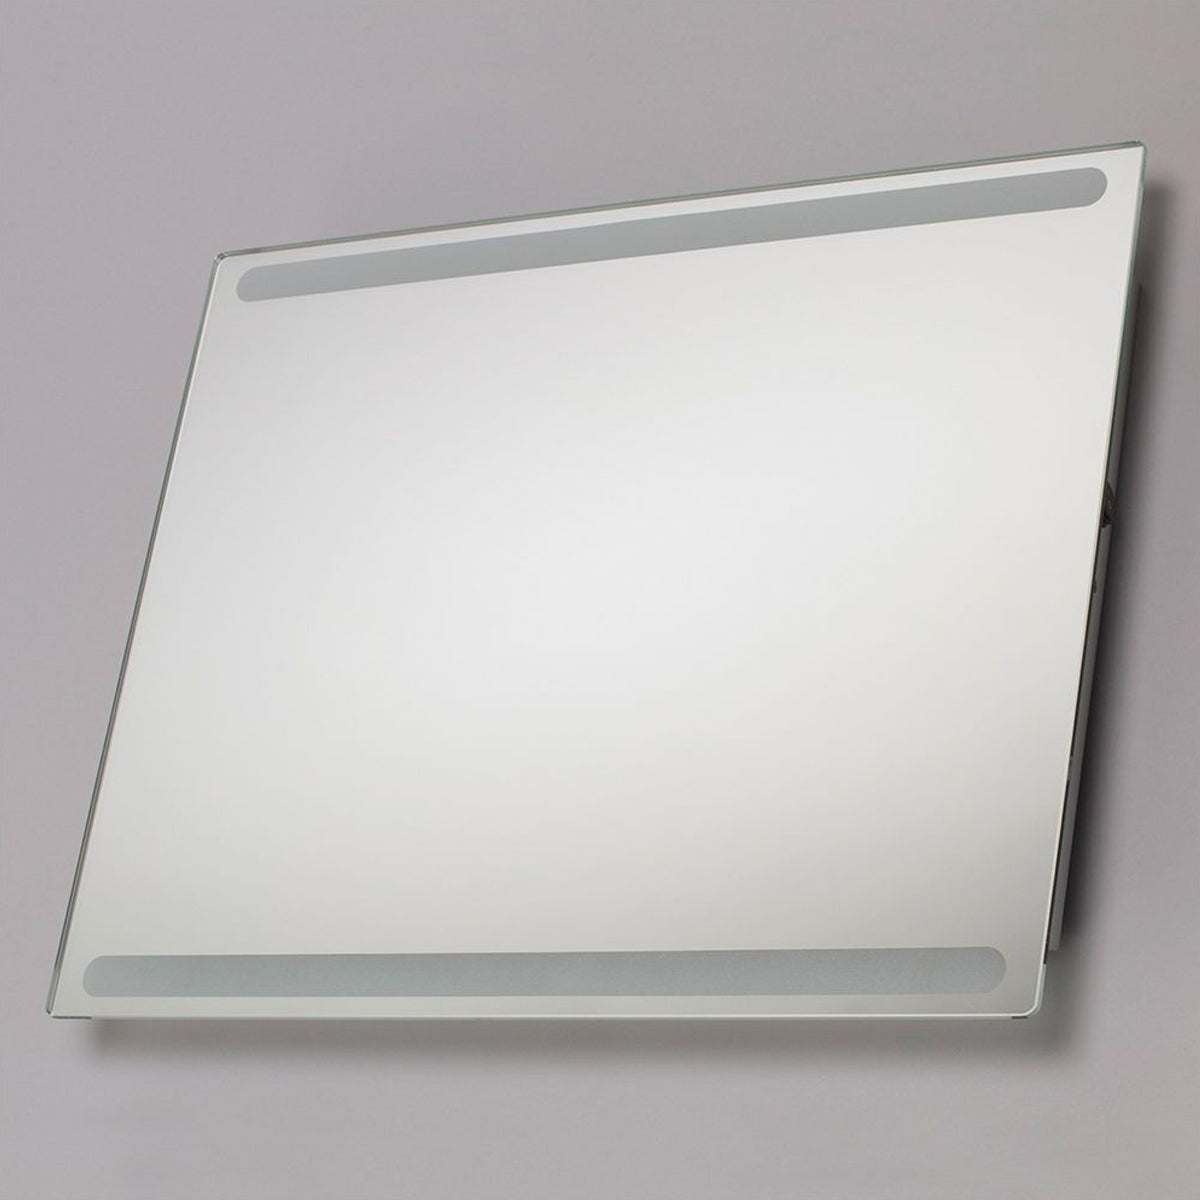 CGC DREW Bathroom Mirror LED Light With On/Off Switch